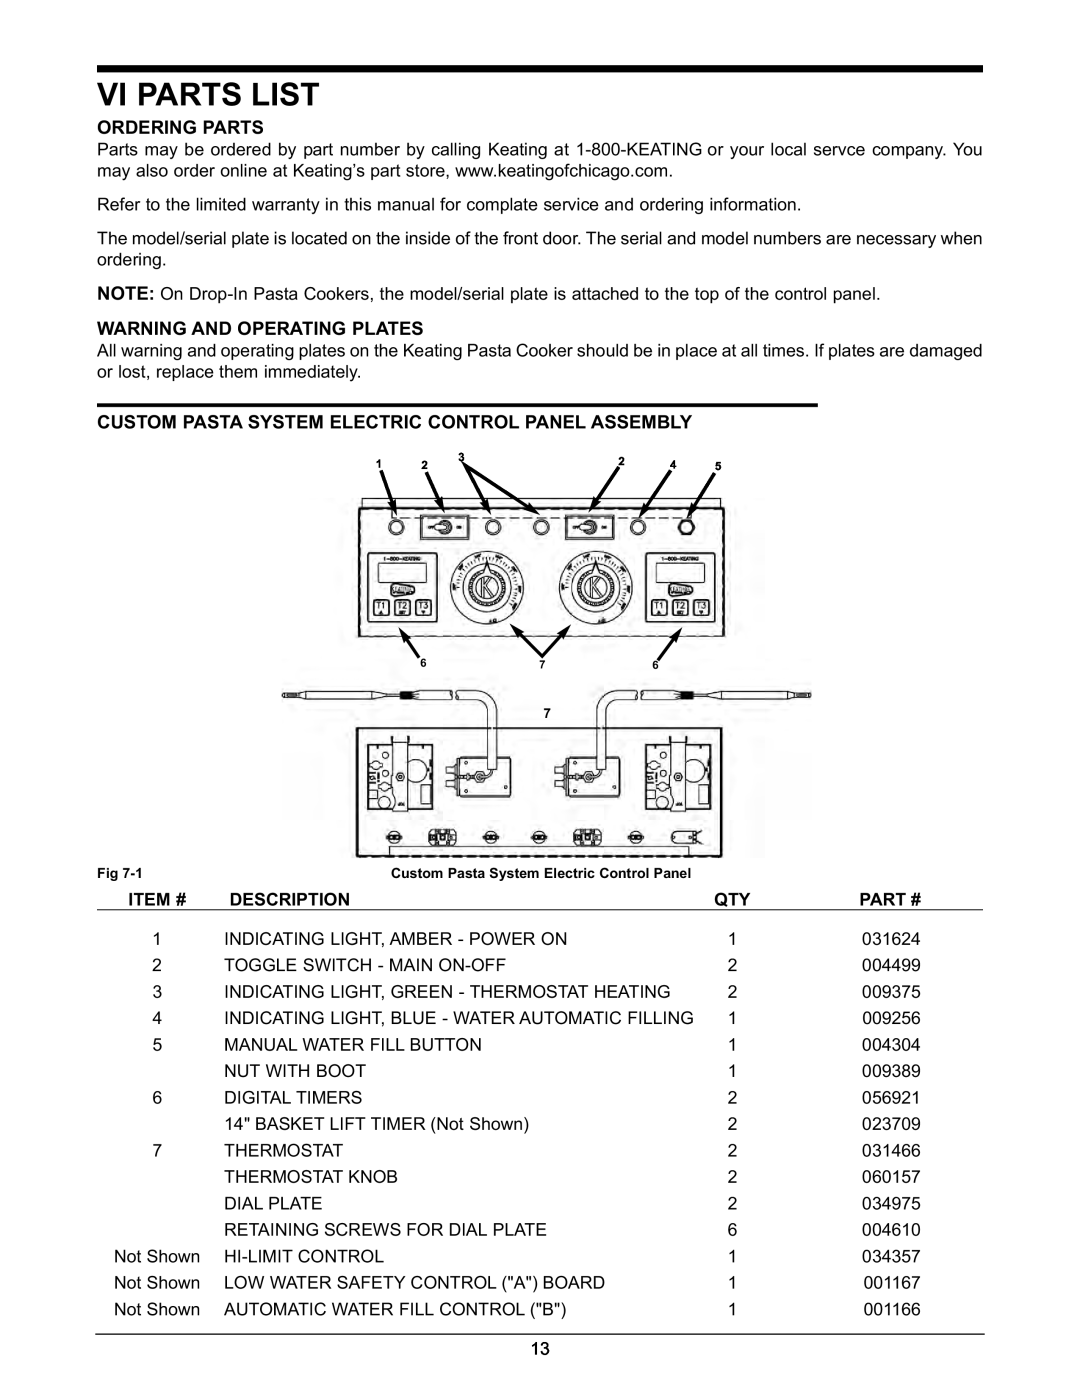 Keating Of Chicago 2009 manual Vi Parts List, Ordering Parts, Warning And Operating Plates 